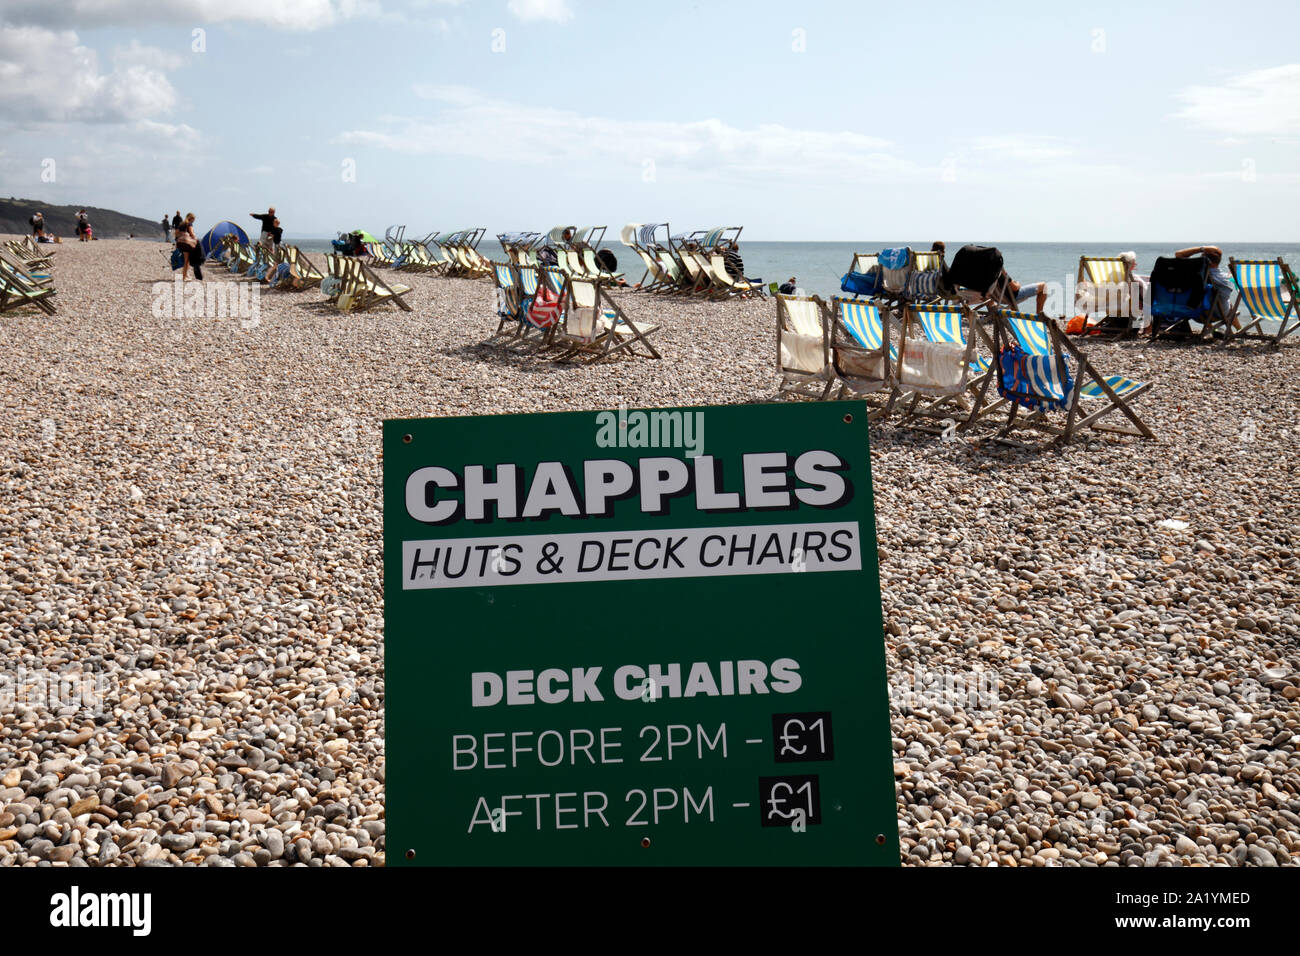 Chapples deckchair hire, Beer pebble beach, East Devon, UK Stock Photo